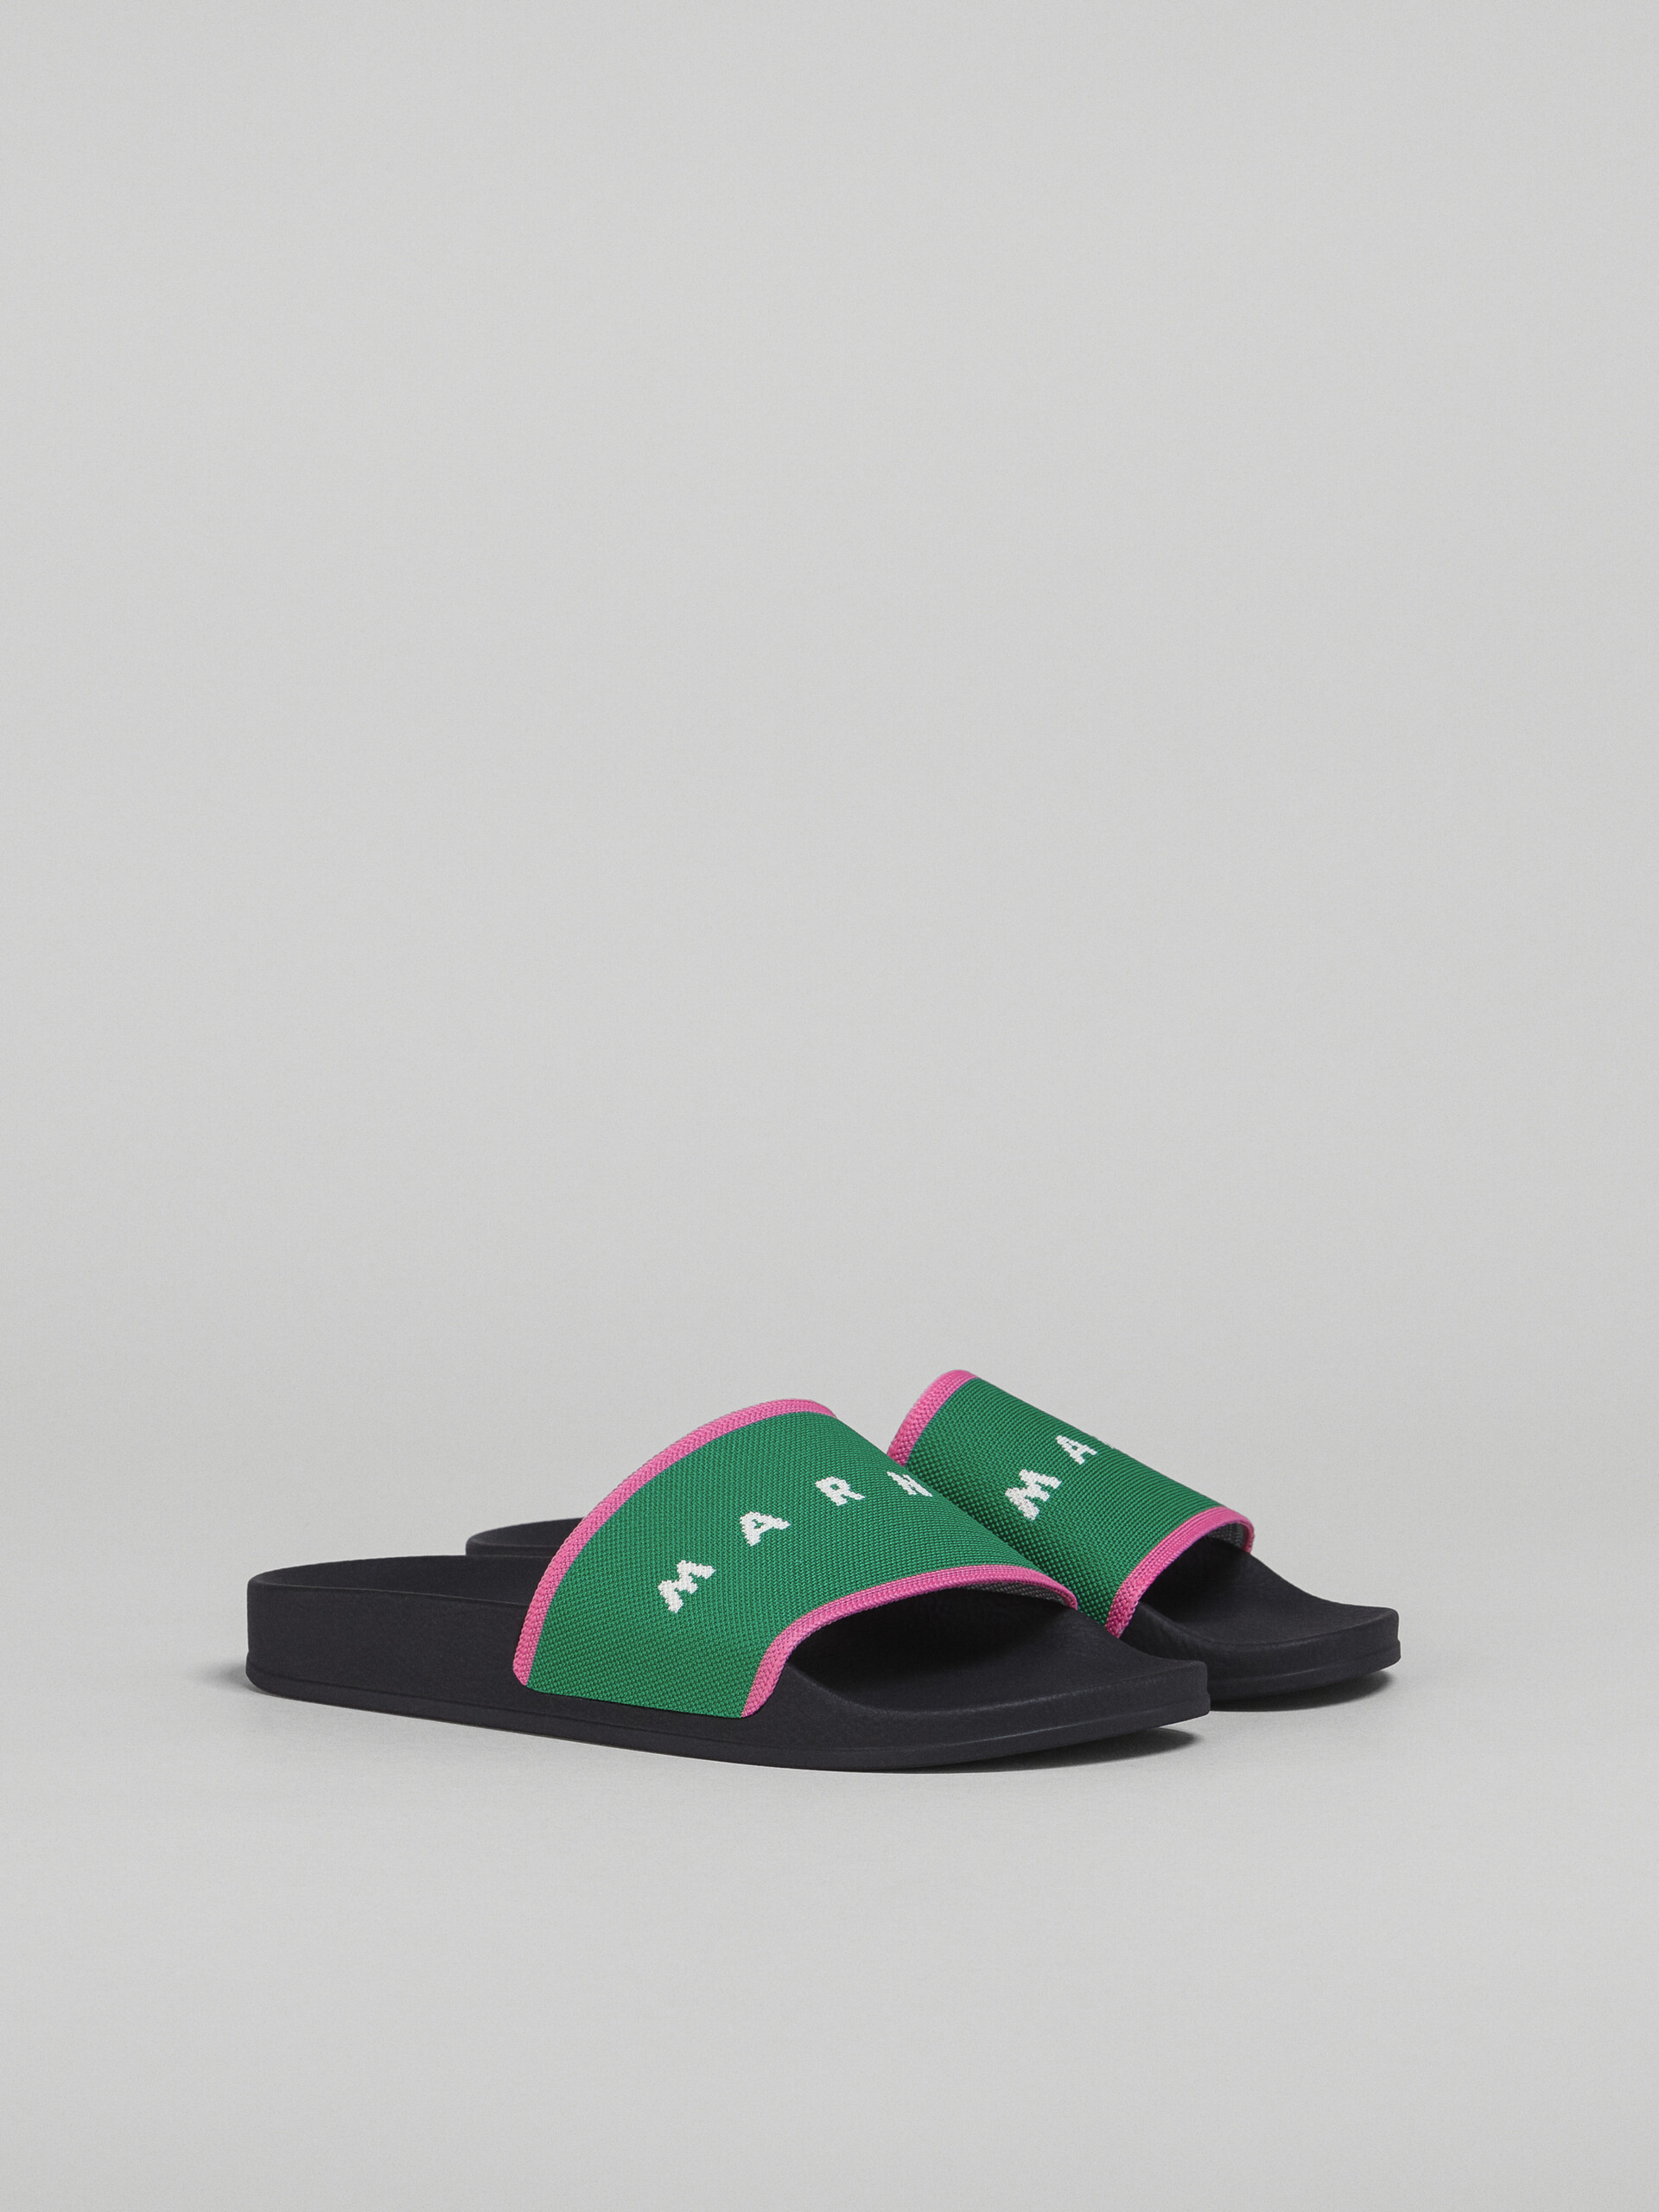 Green and pink stretch logo jacquard slide - Sandals - Image 2